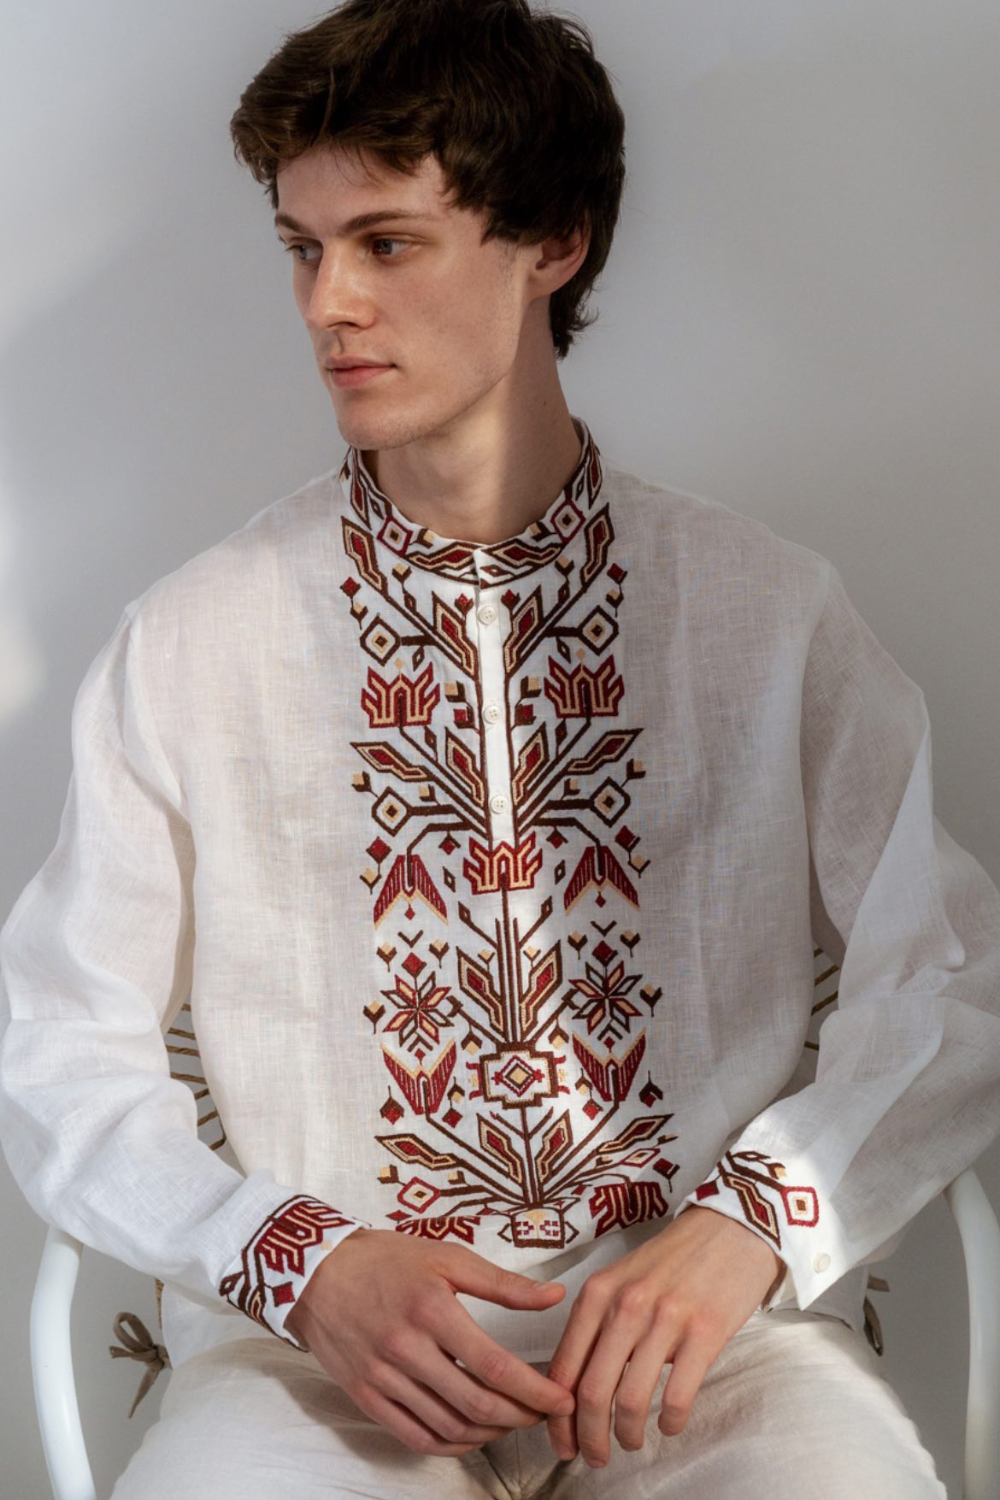 Chol košile Rug Burgundsko na bílém stojanu na prádlo (Gaptuvalnya)